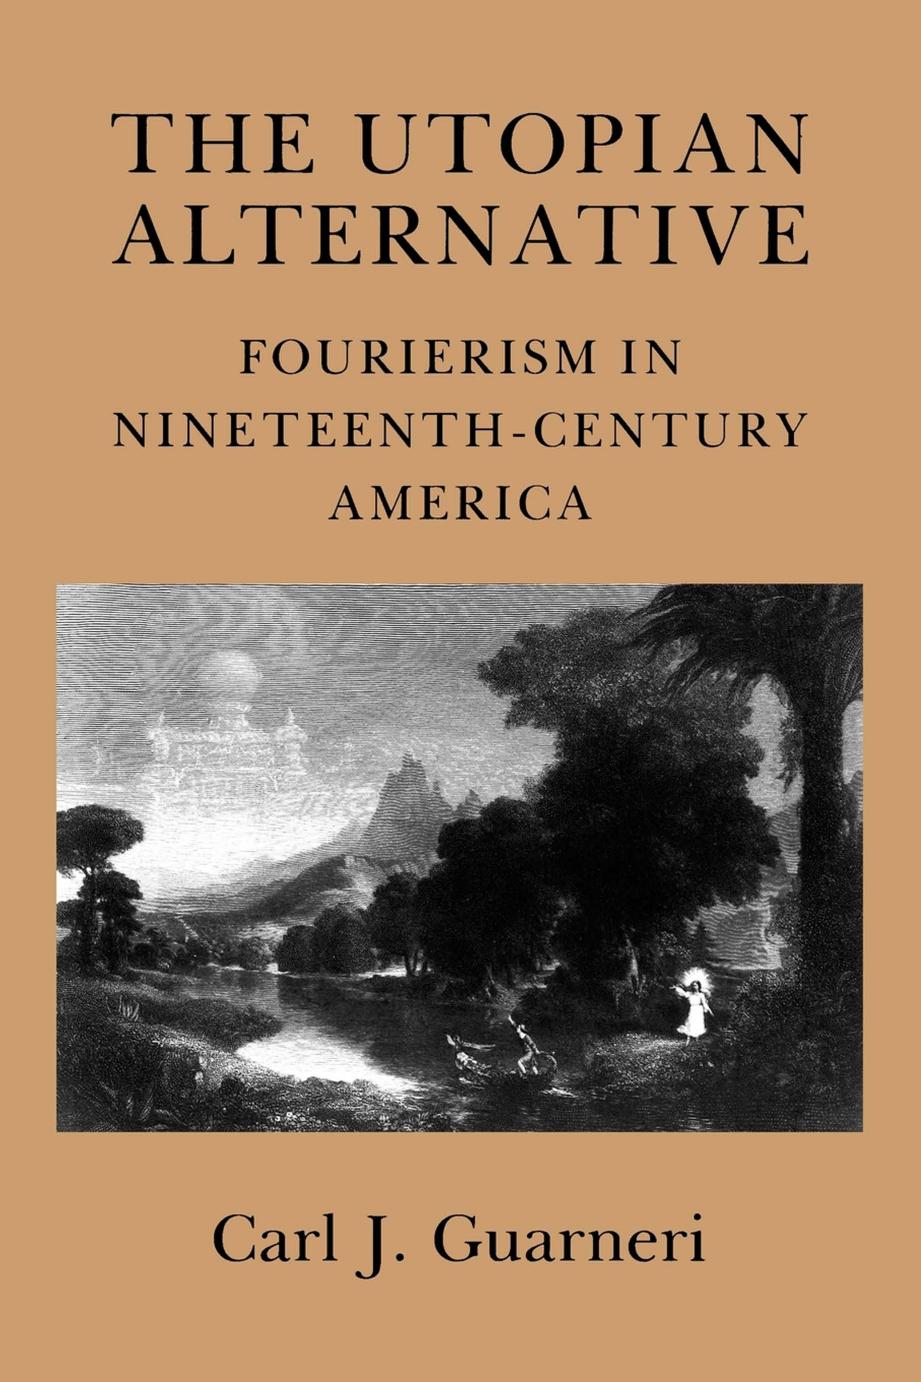 The Utopian Alternative: Fourierism in Nineteenth-Century America by Carl J. Guarneri